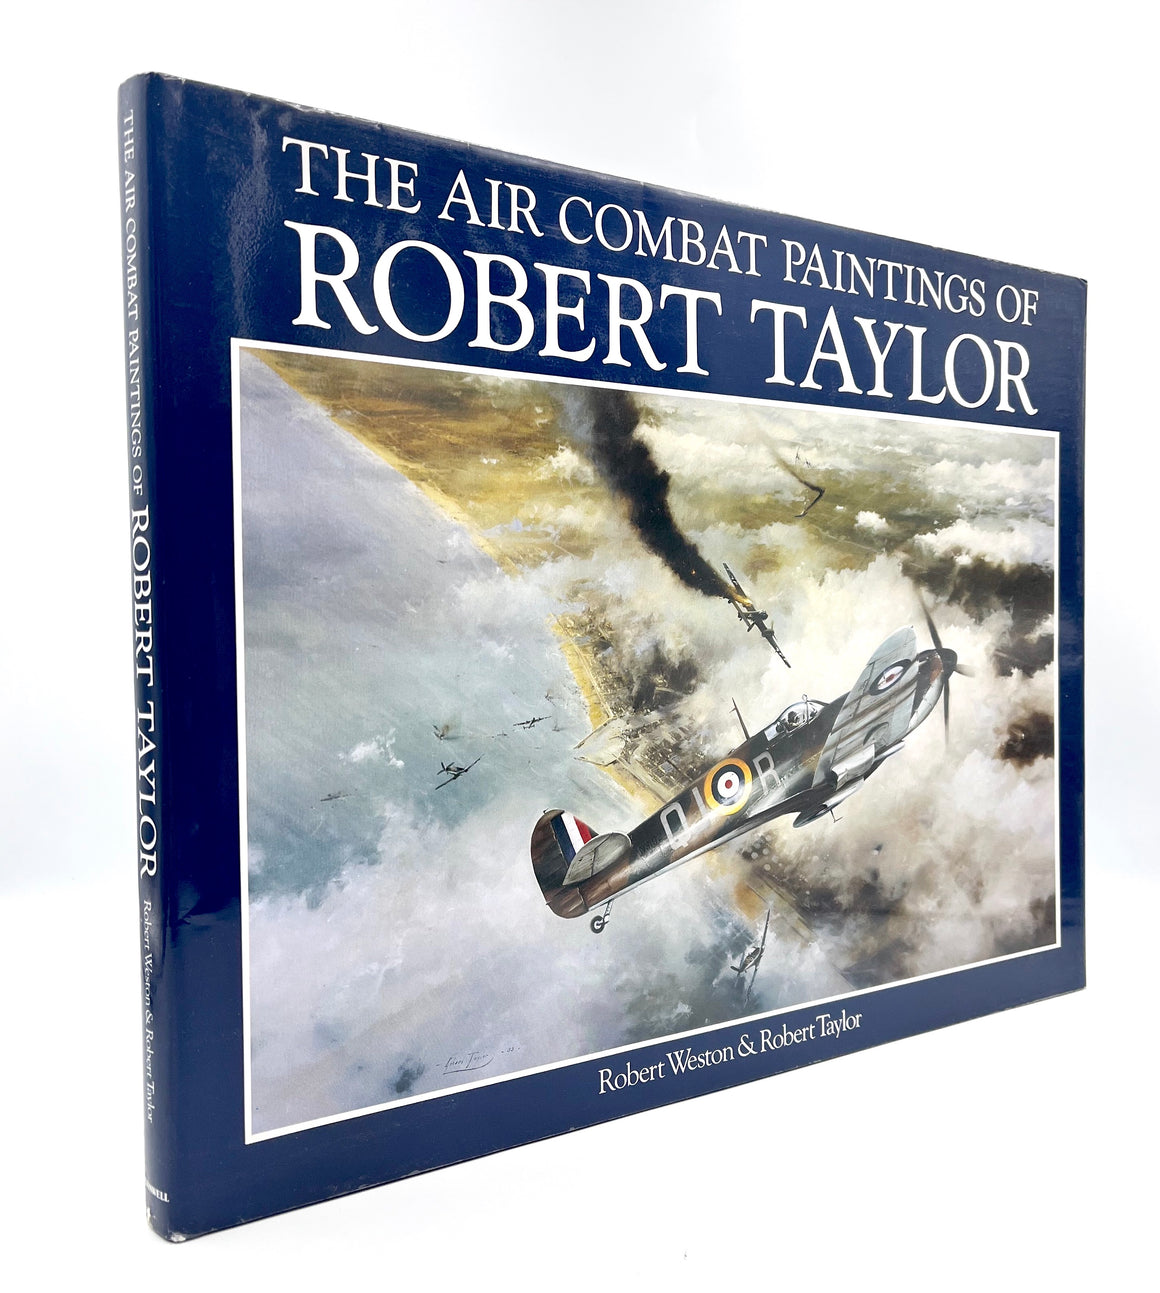 The Air Combat Paintings of Robert Taylor, by Robert Weston and Robert Taylor, 1987